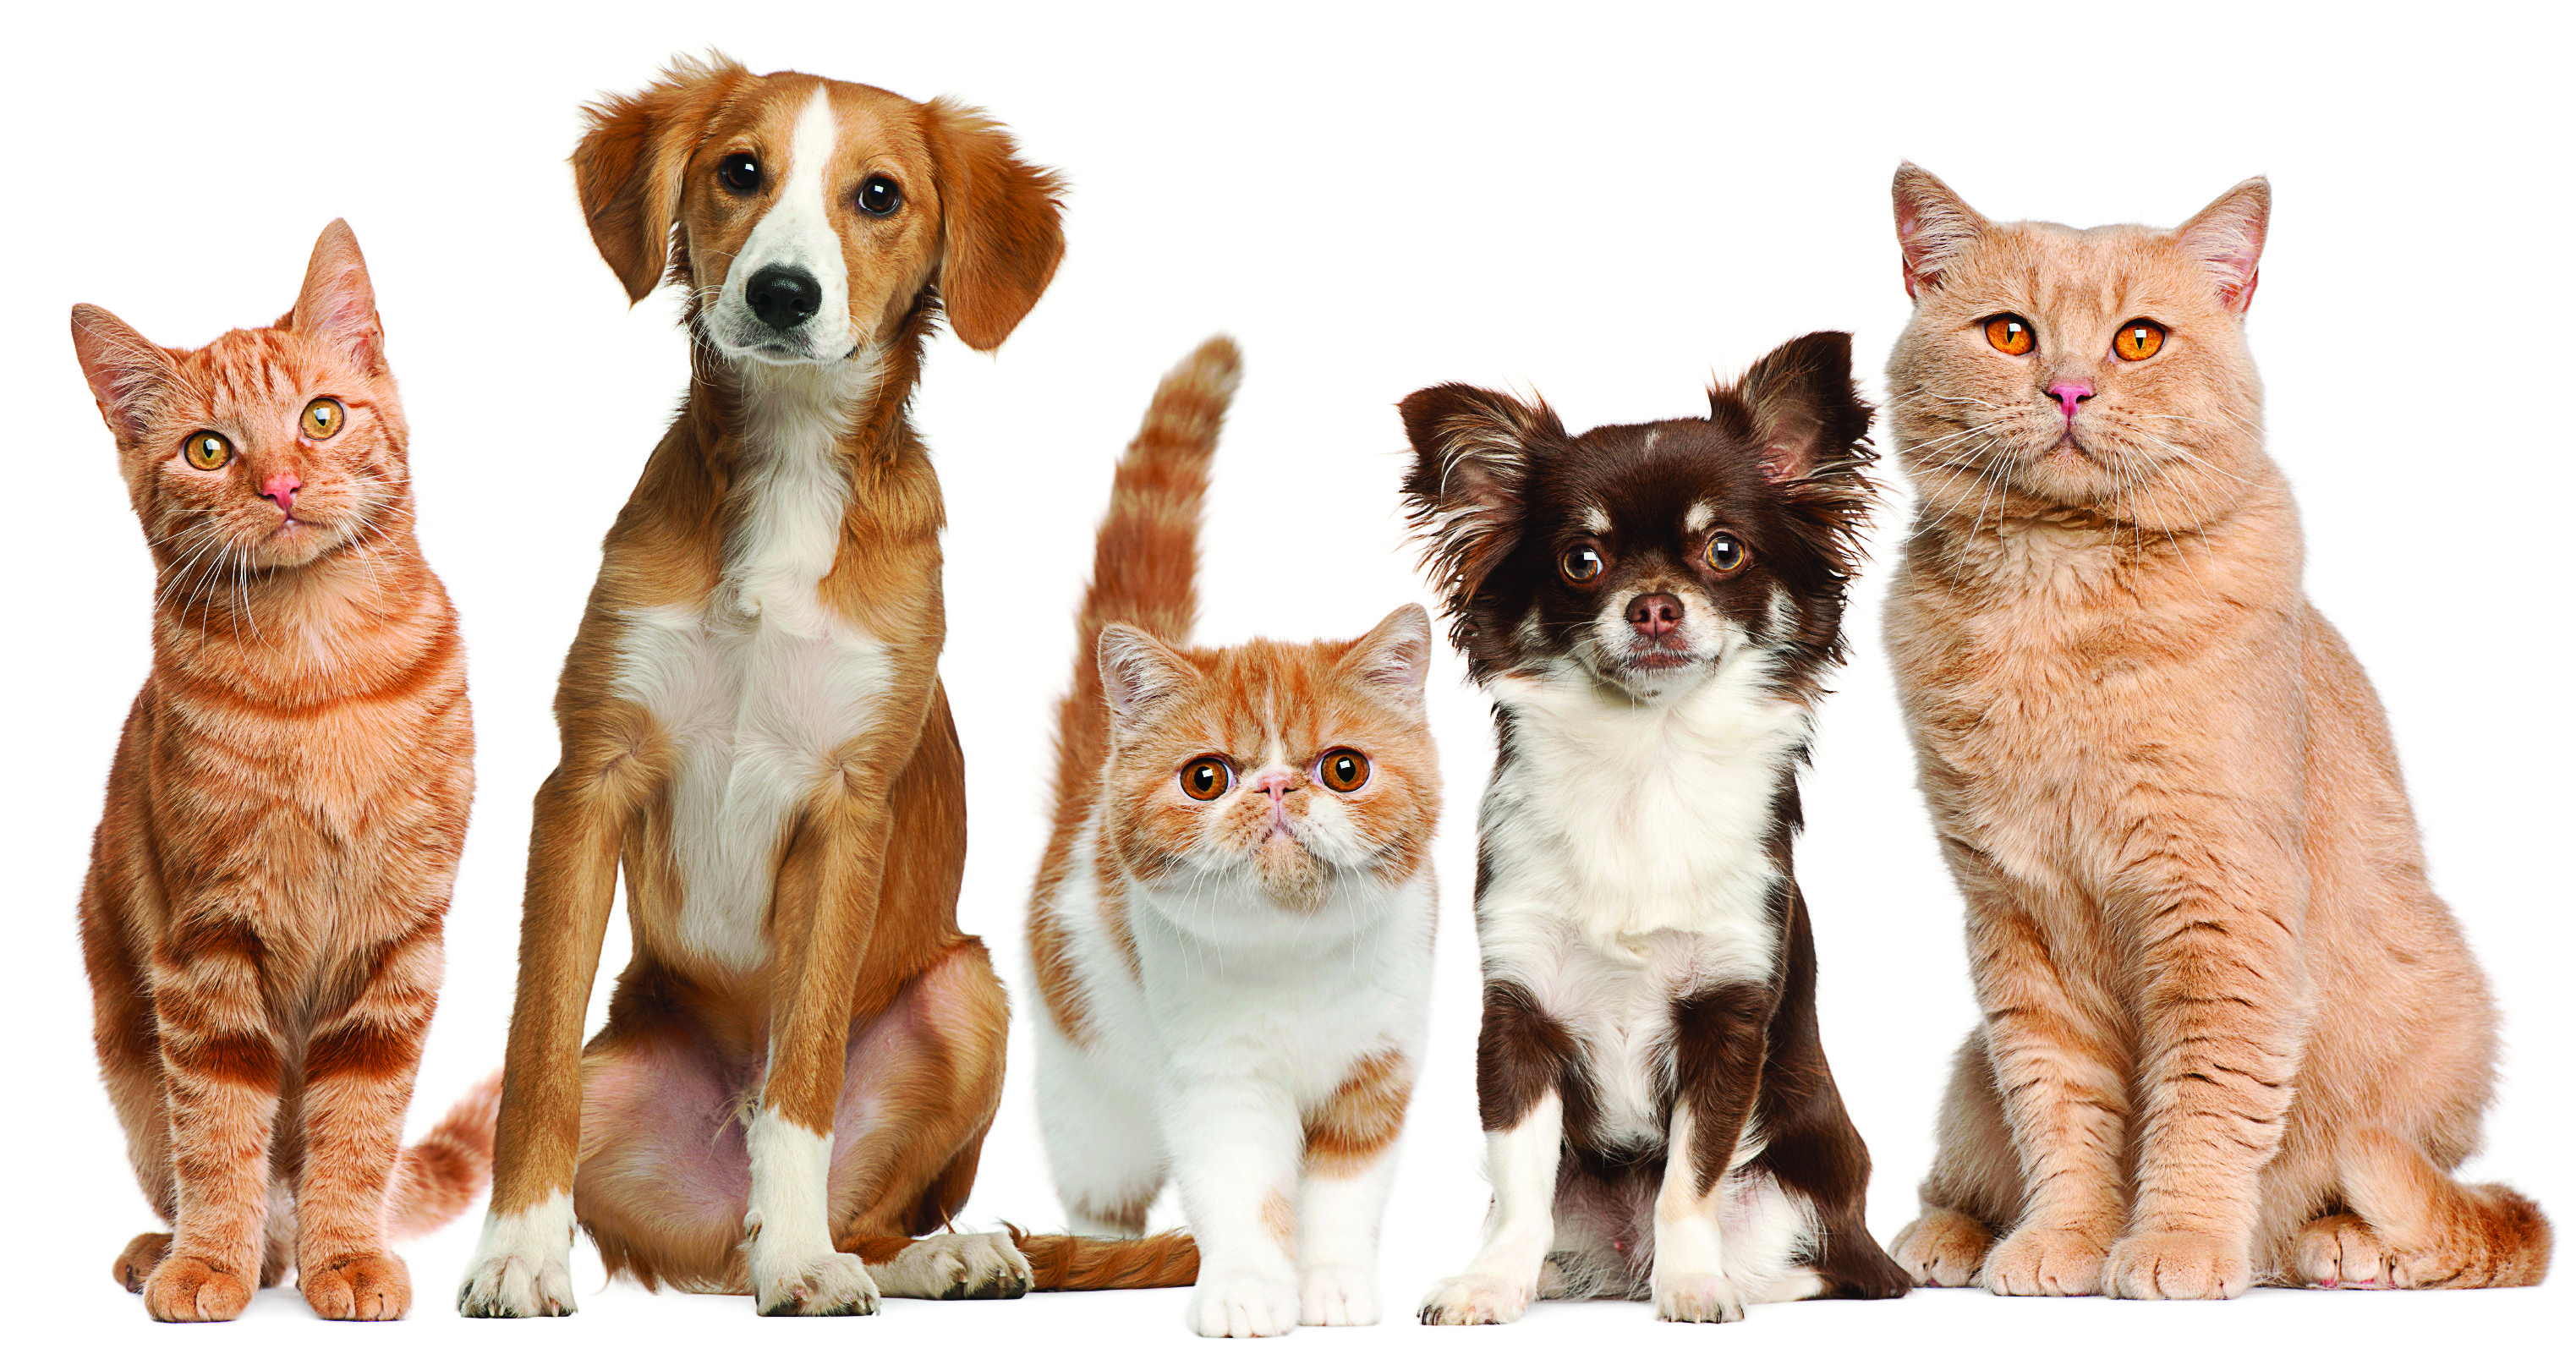 Cats dogs pets wallpaper | 3046x1614 | 132636 | WallpaperUP